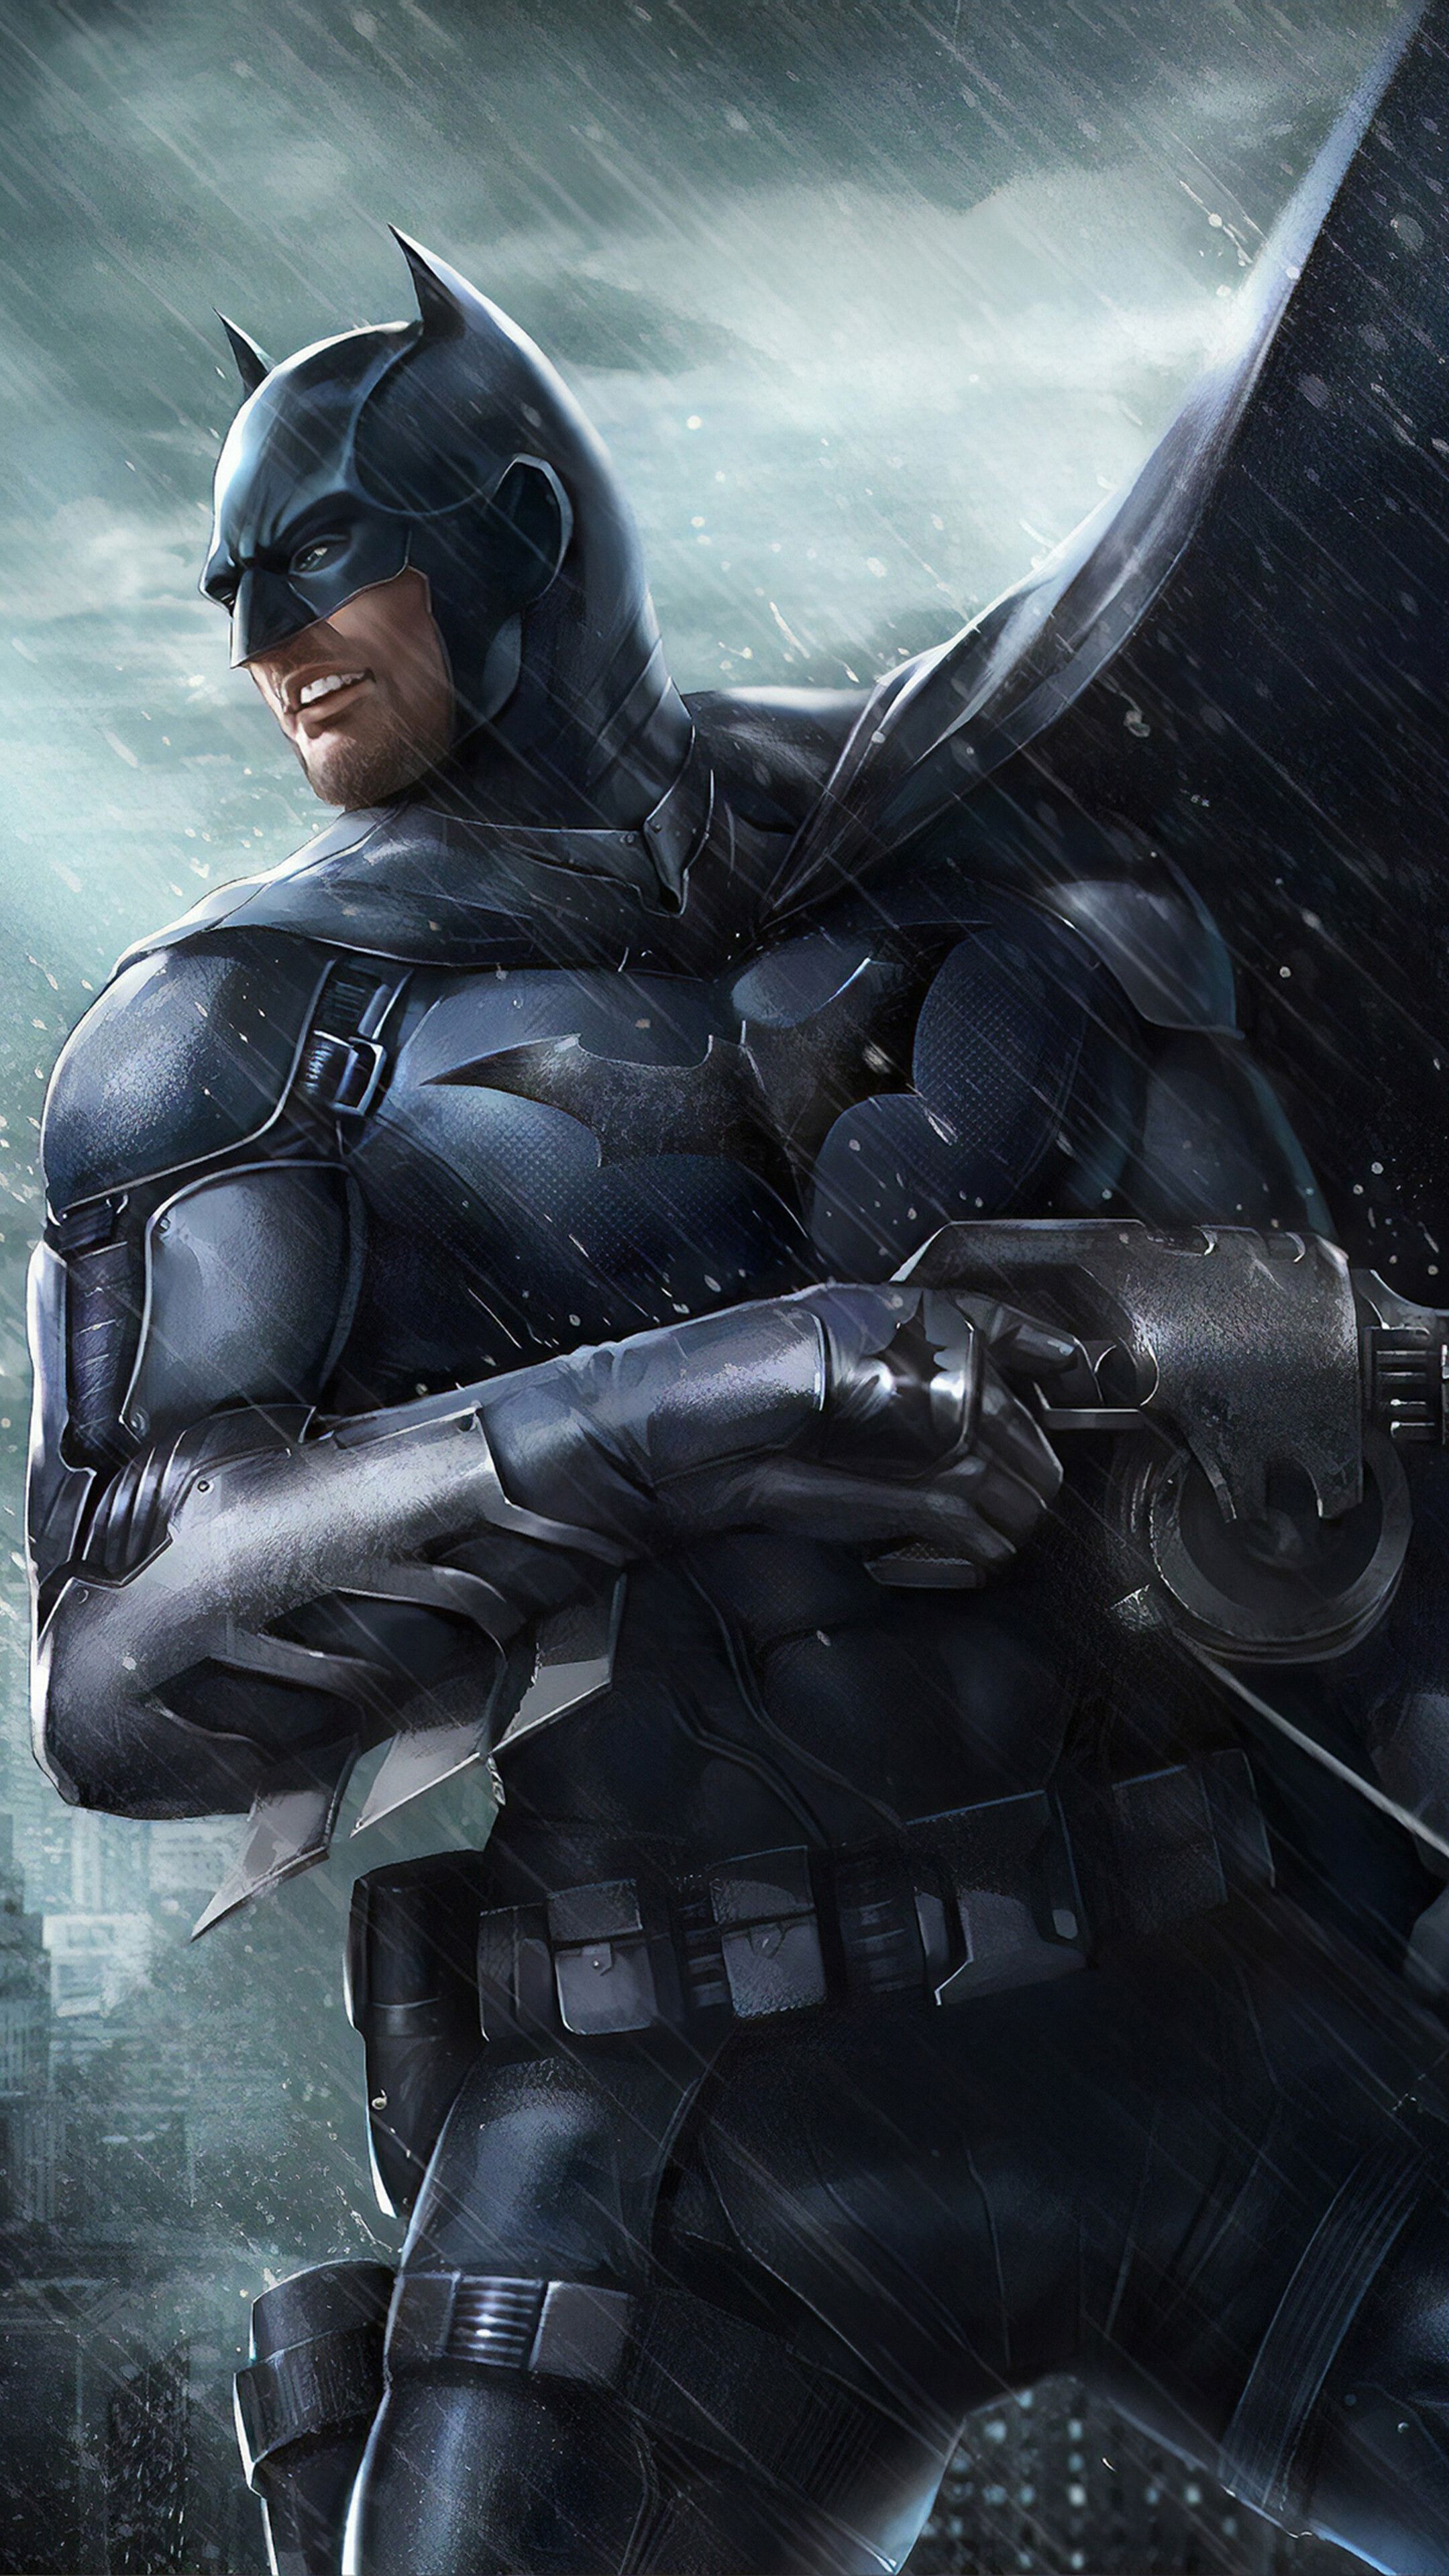 Batman, 4K phone HD Wallpaper, Image, Background, Photo and Picture. Mocah HD Wallpaper